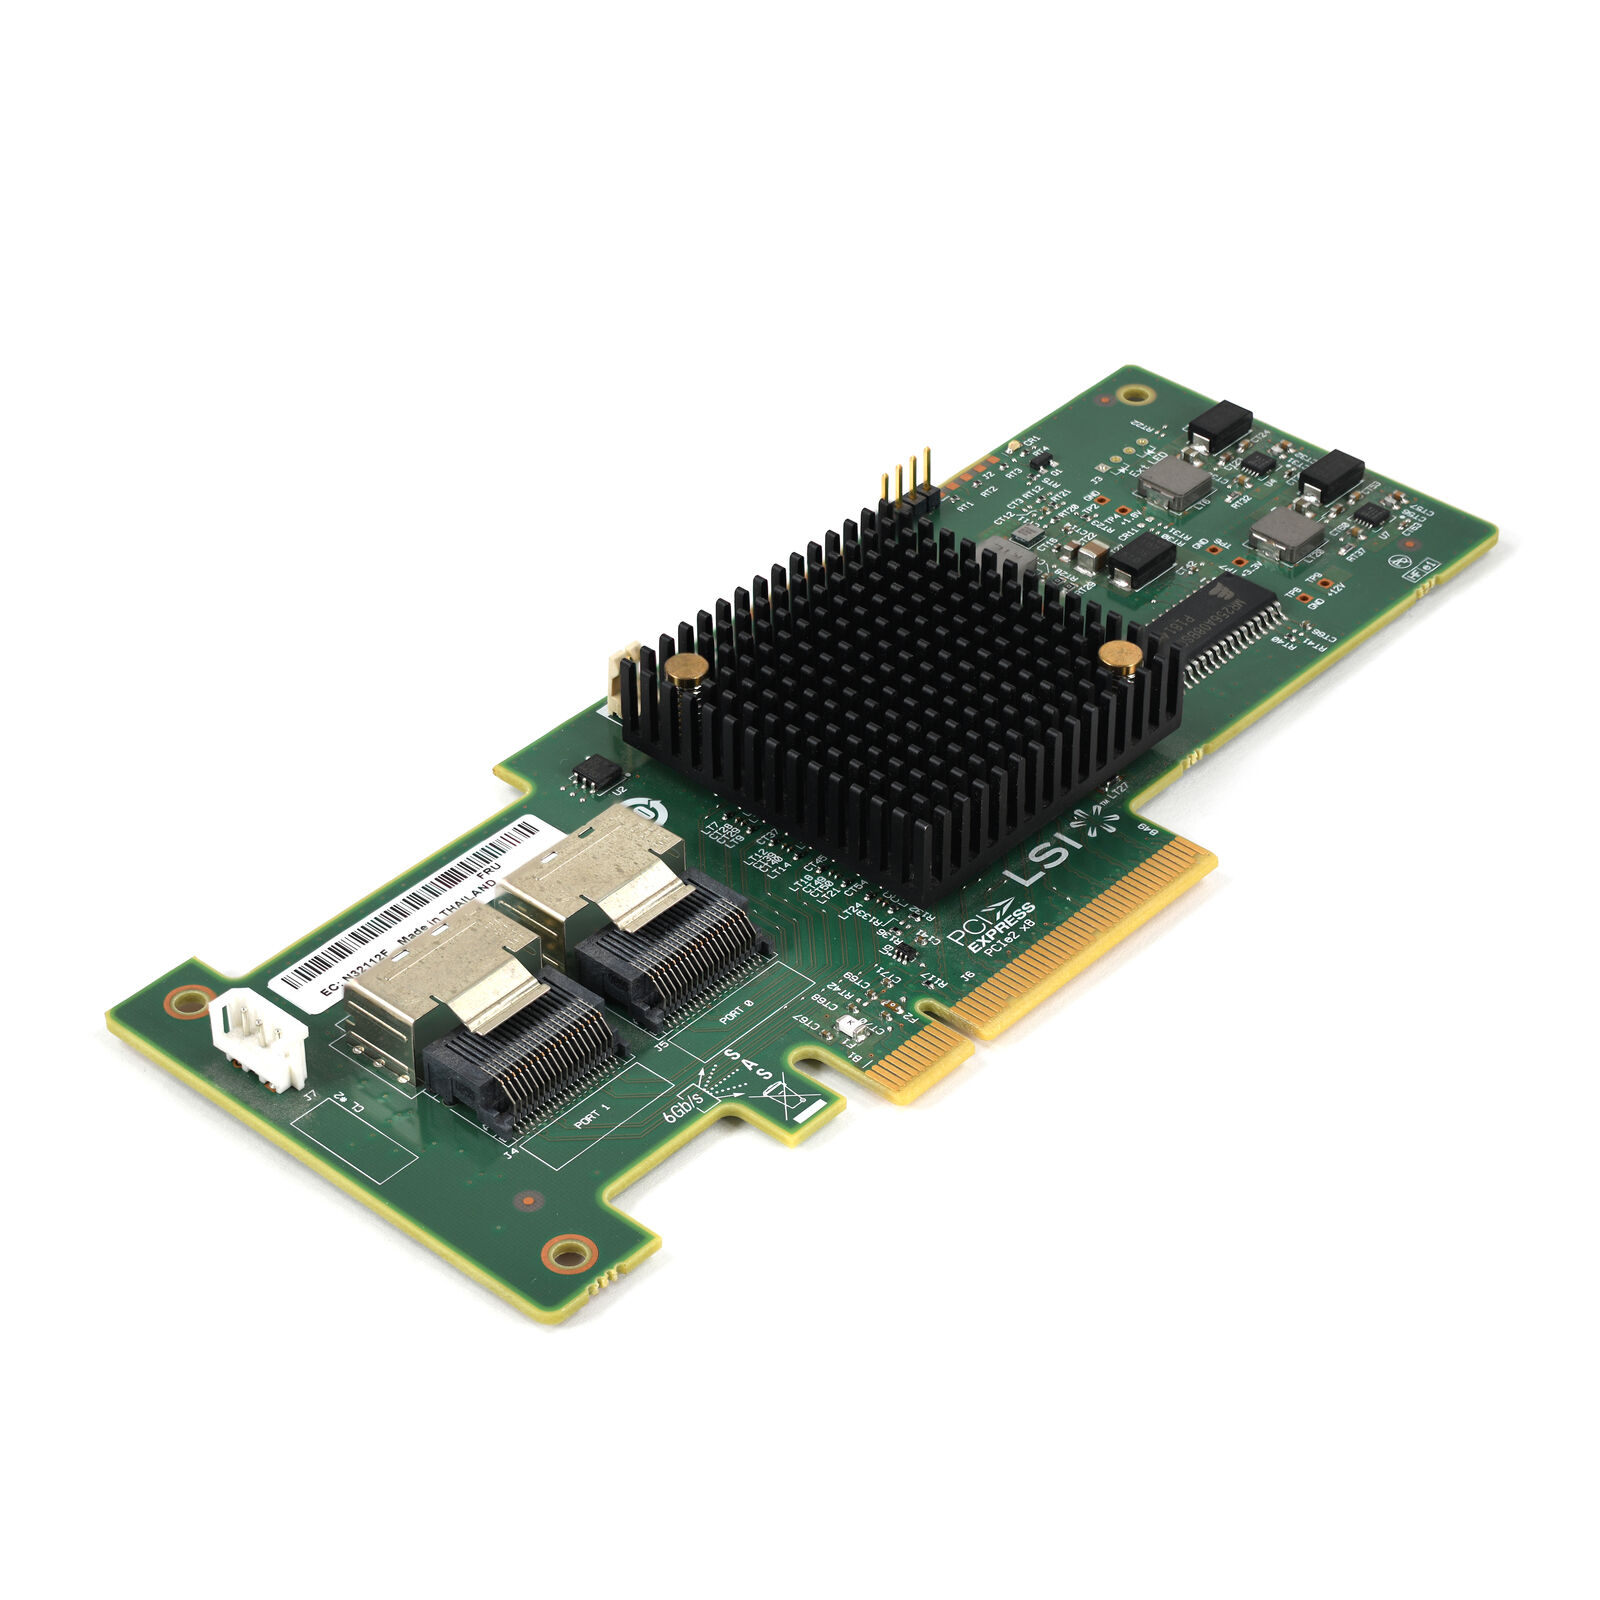 LSI 9223-8I 6GBPS PCIe SAS Internal RAID Controller